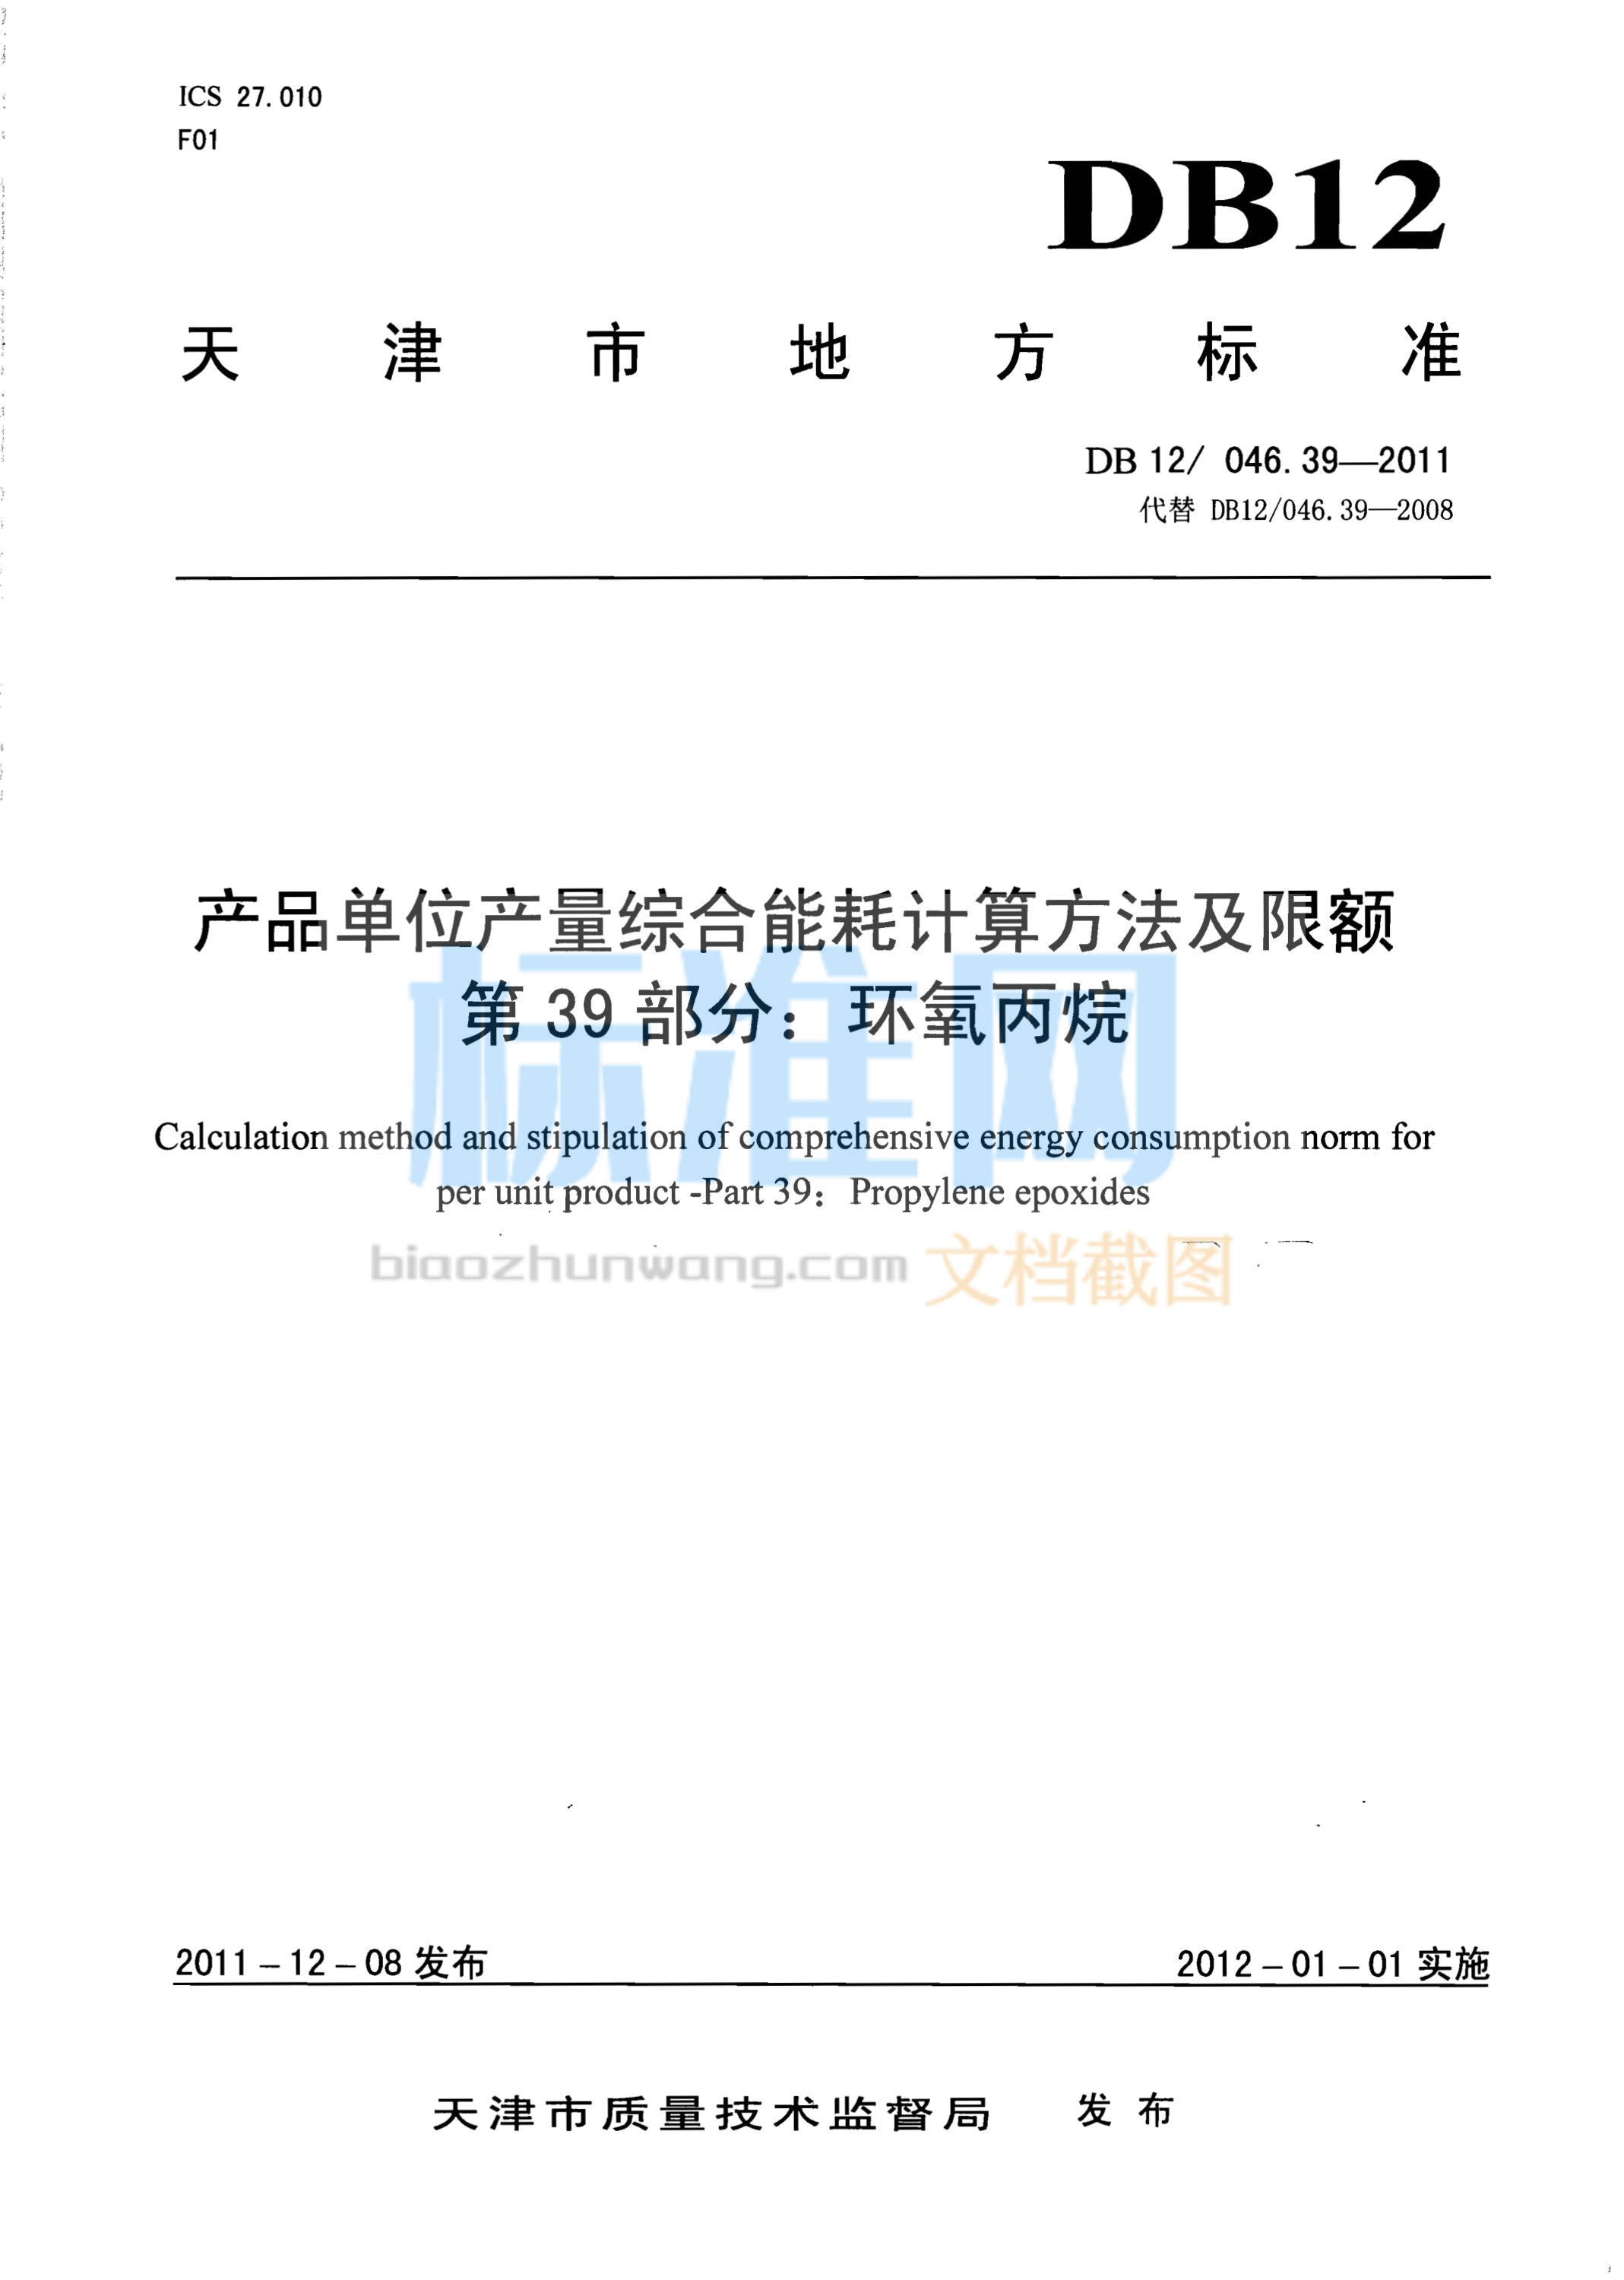 DB12/046.39-2011 产品单位产量综合能耗计算方法及限额 第39部分：环氧丙烷